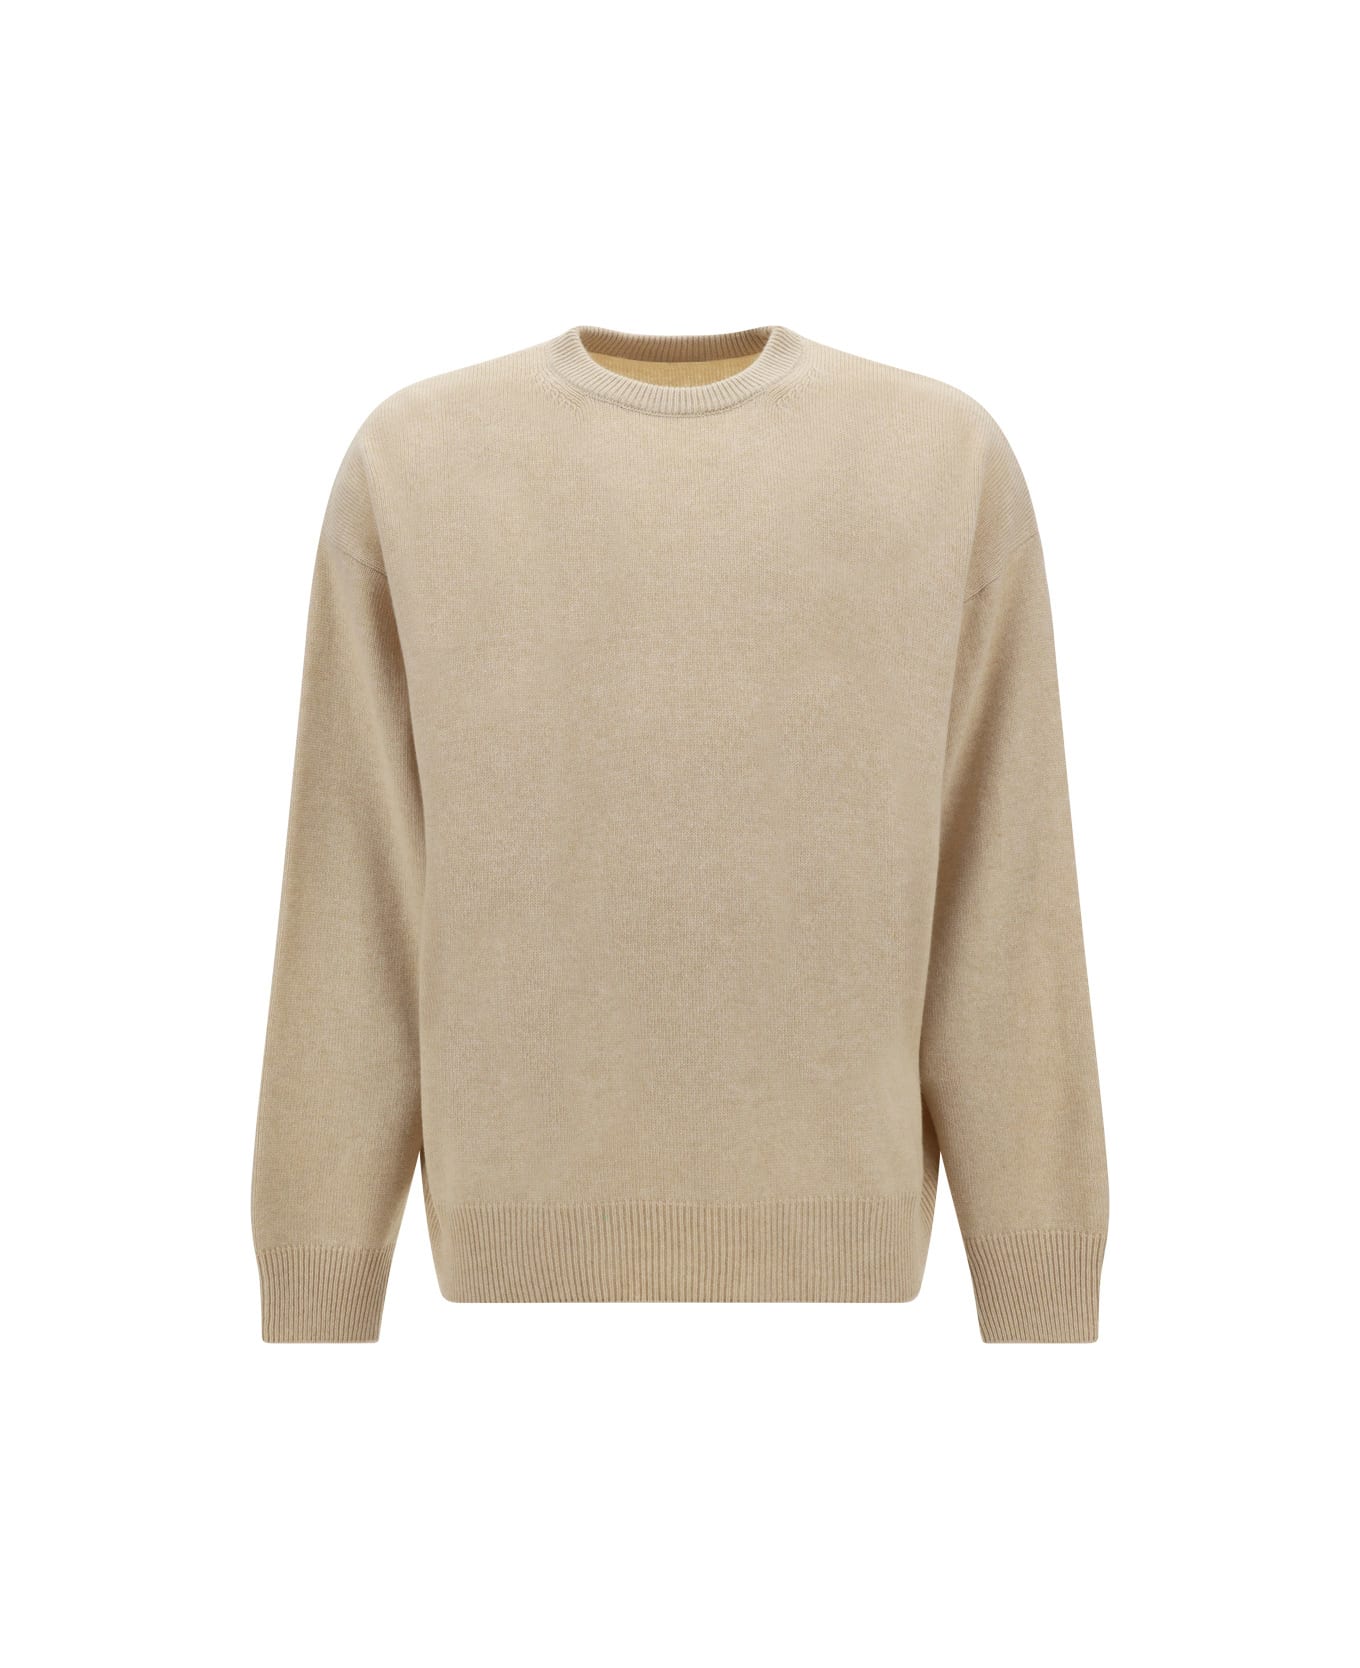 Balenciaga Sweater - Beige